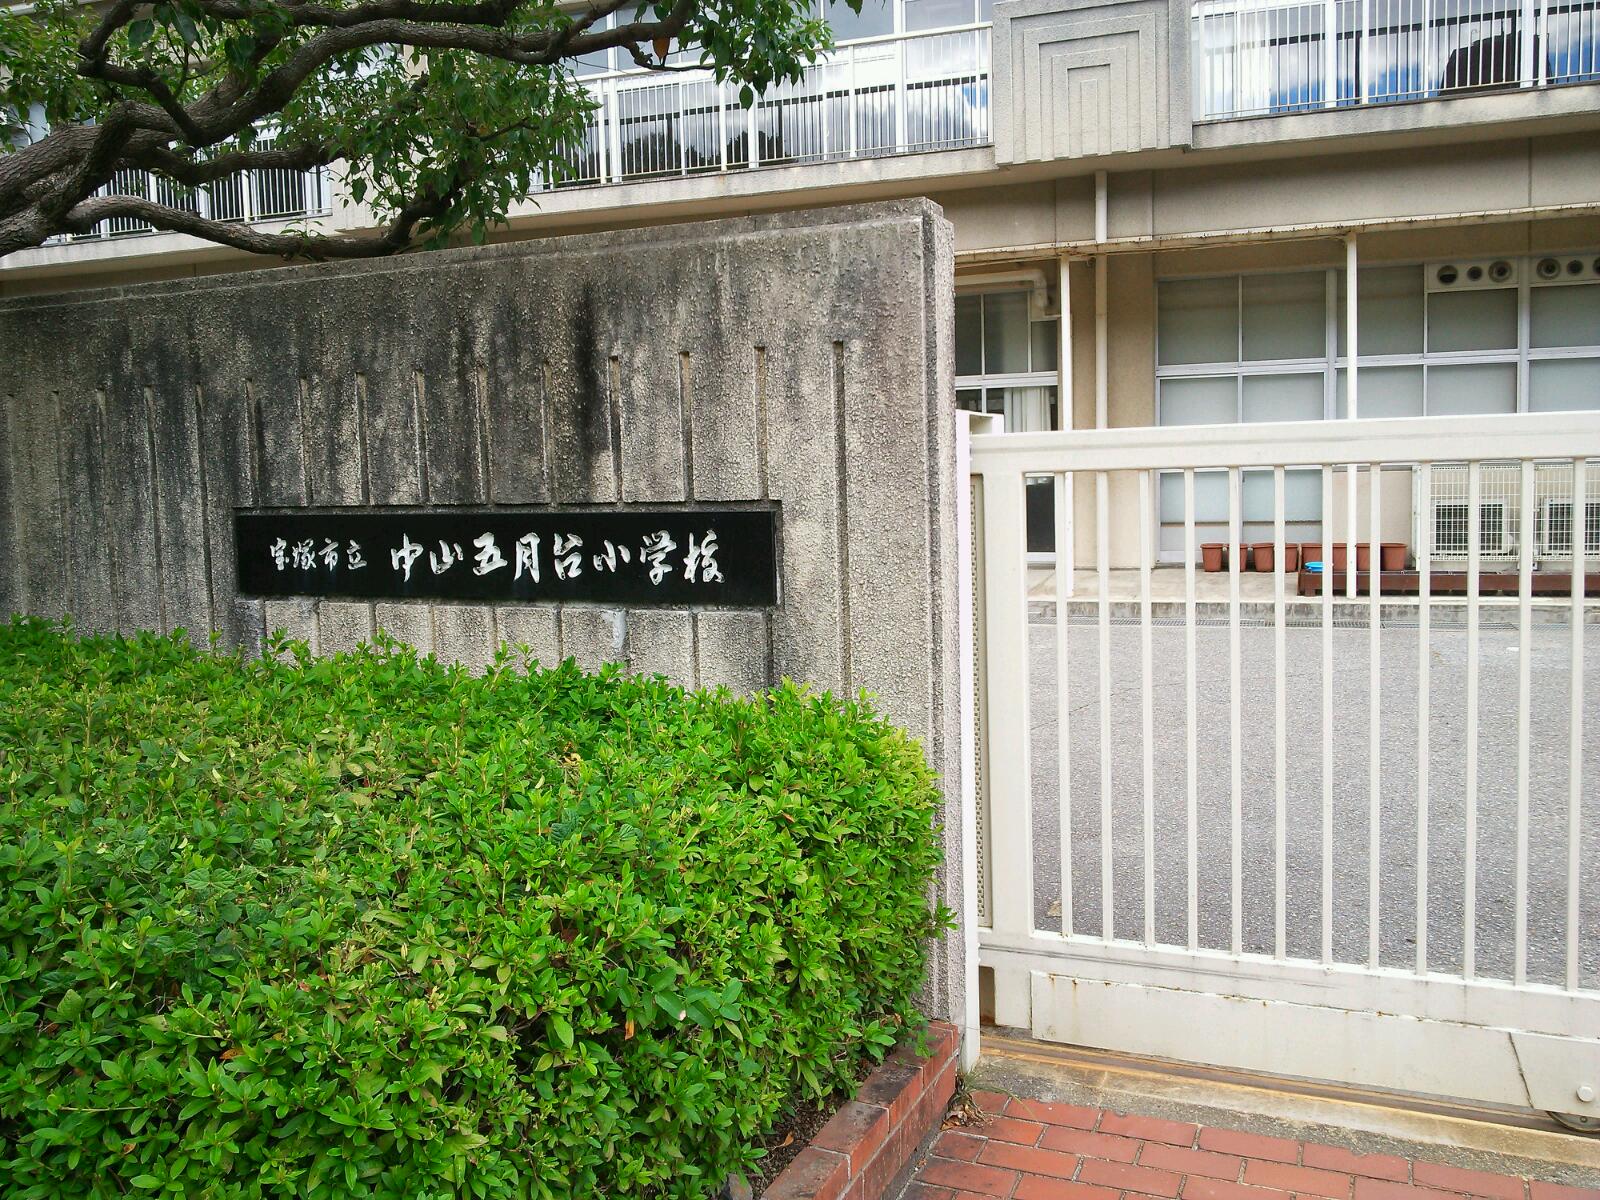 Primary school. Takarazuka City Nakayamasatsukidai 1000m up to elementary school (elementary school)